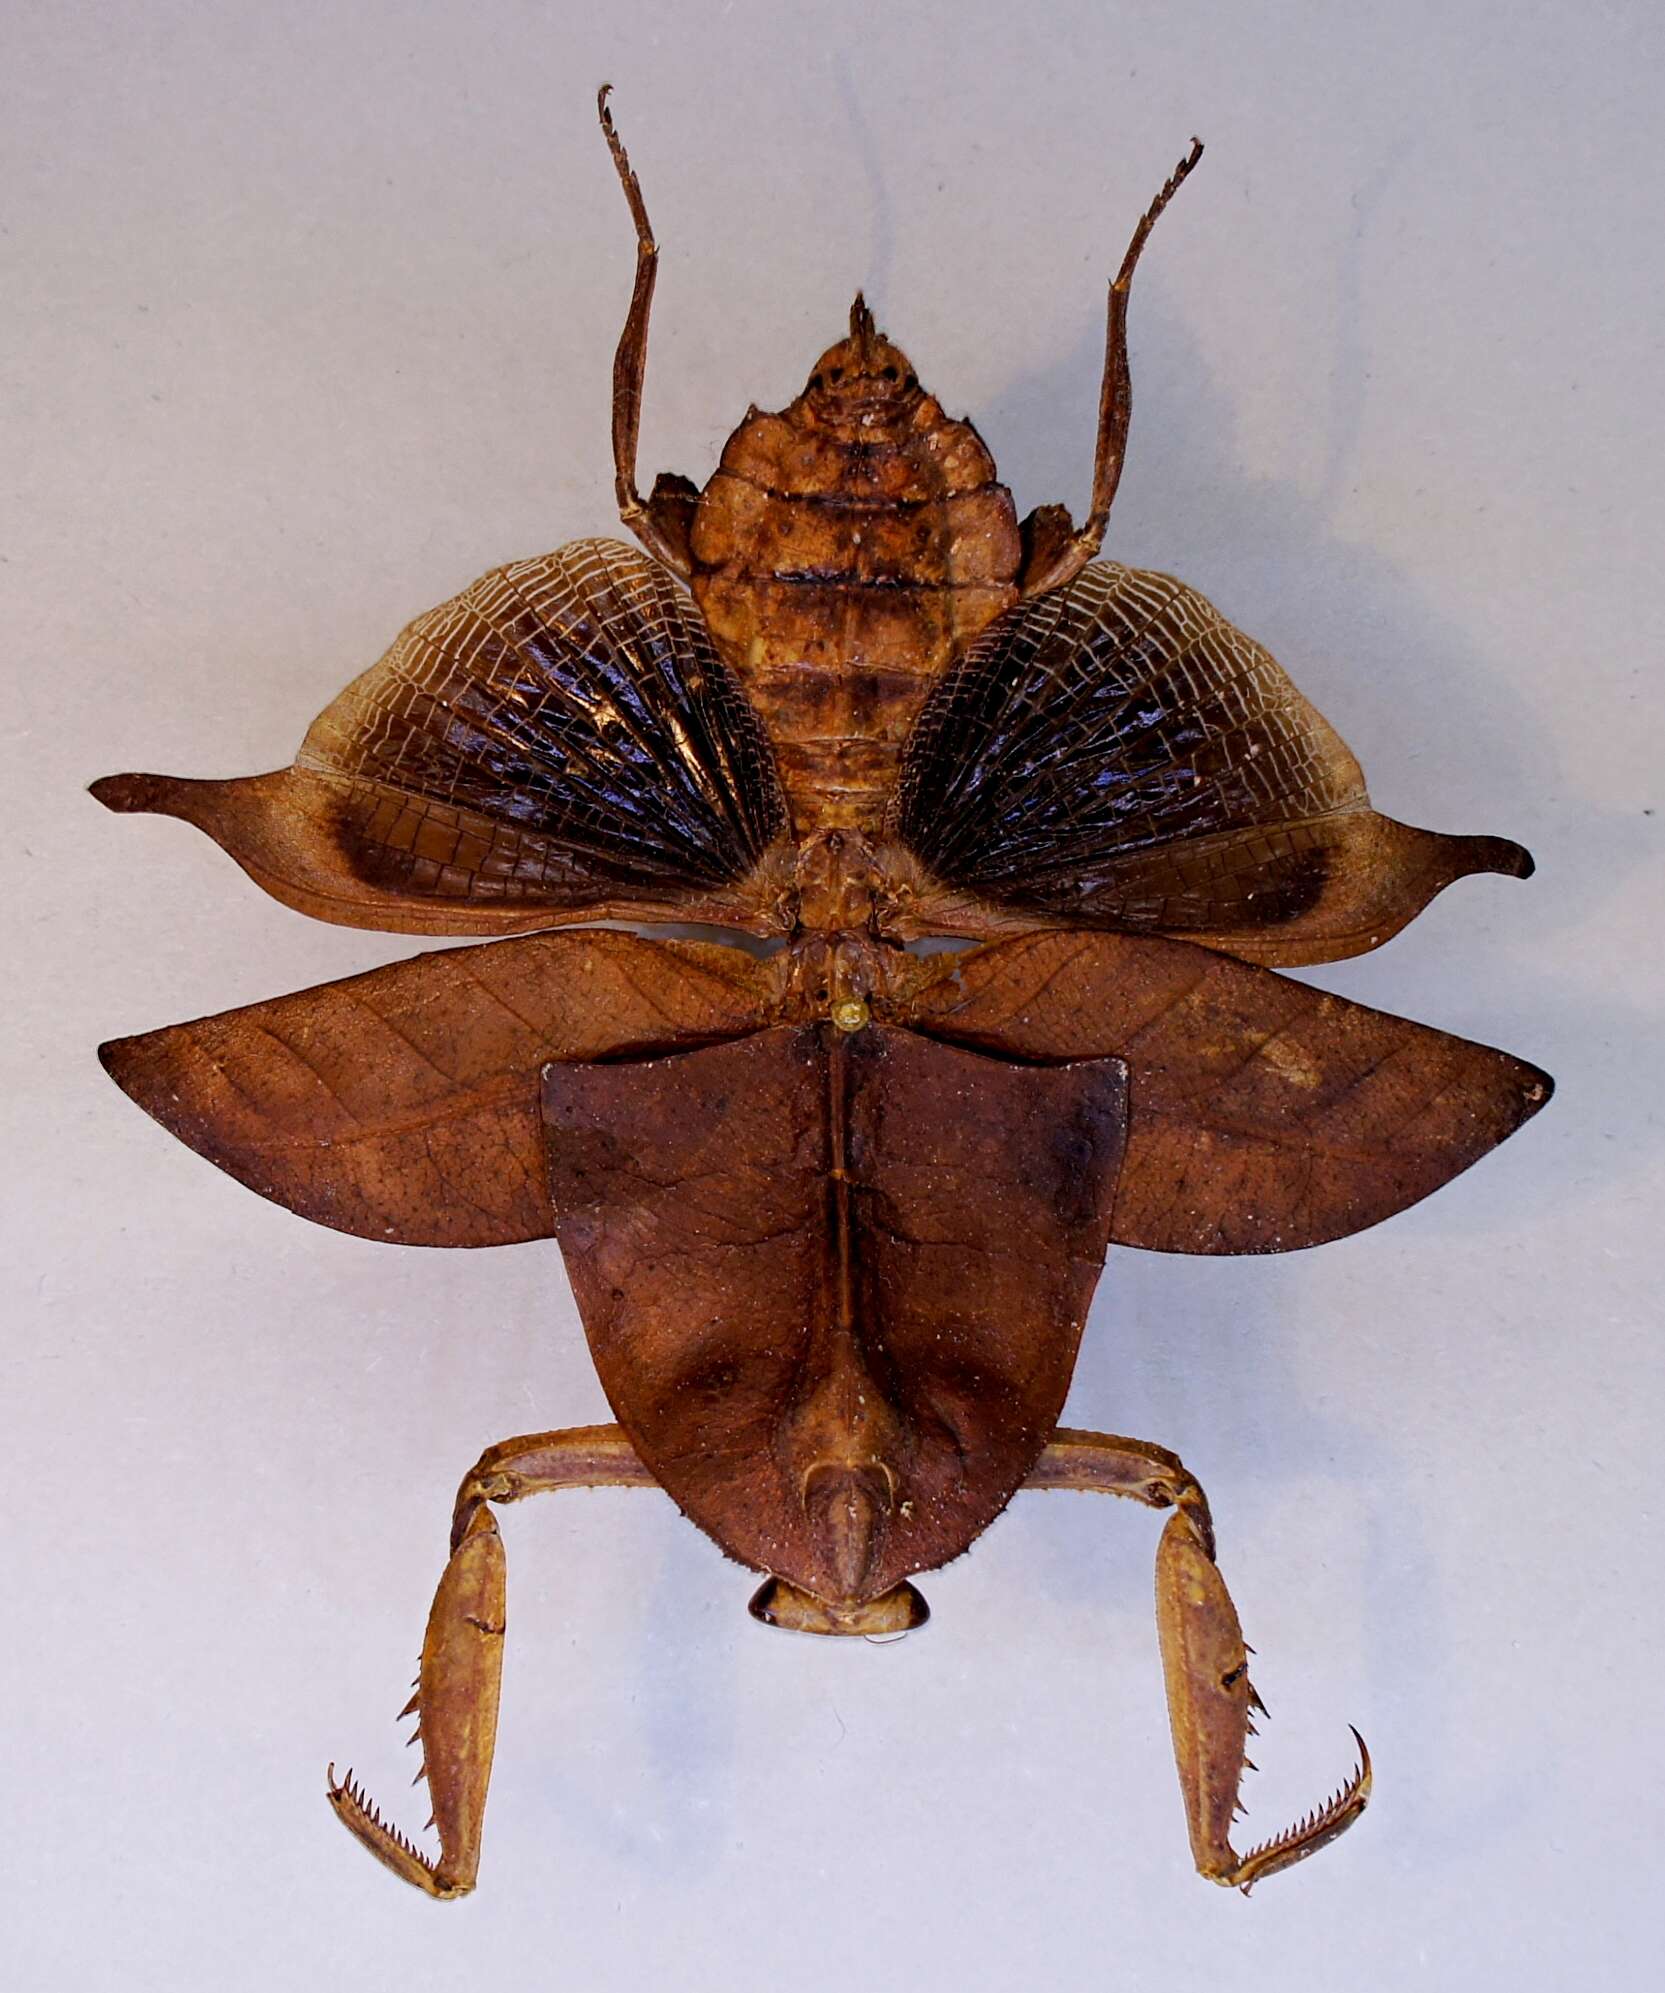 Image of Deroplatys truncata Guerin-Meneville 1843